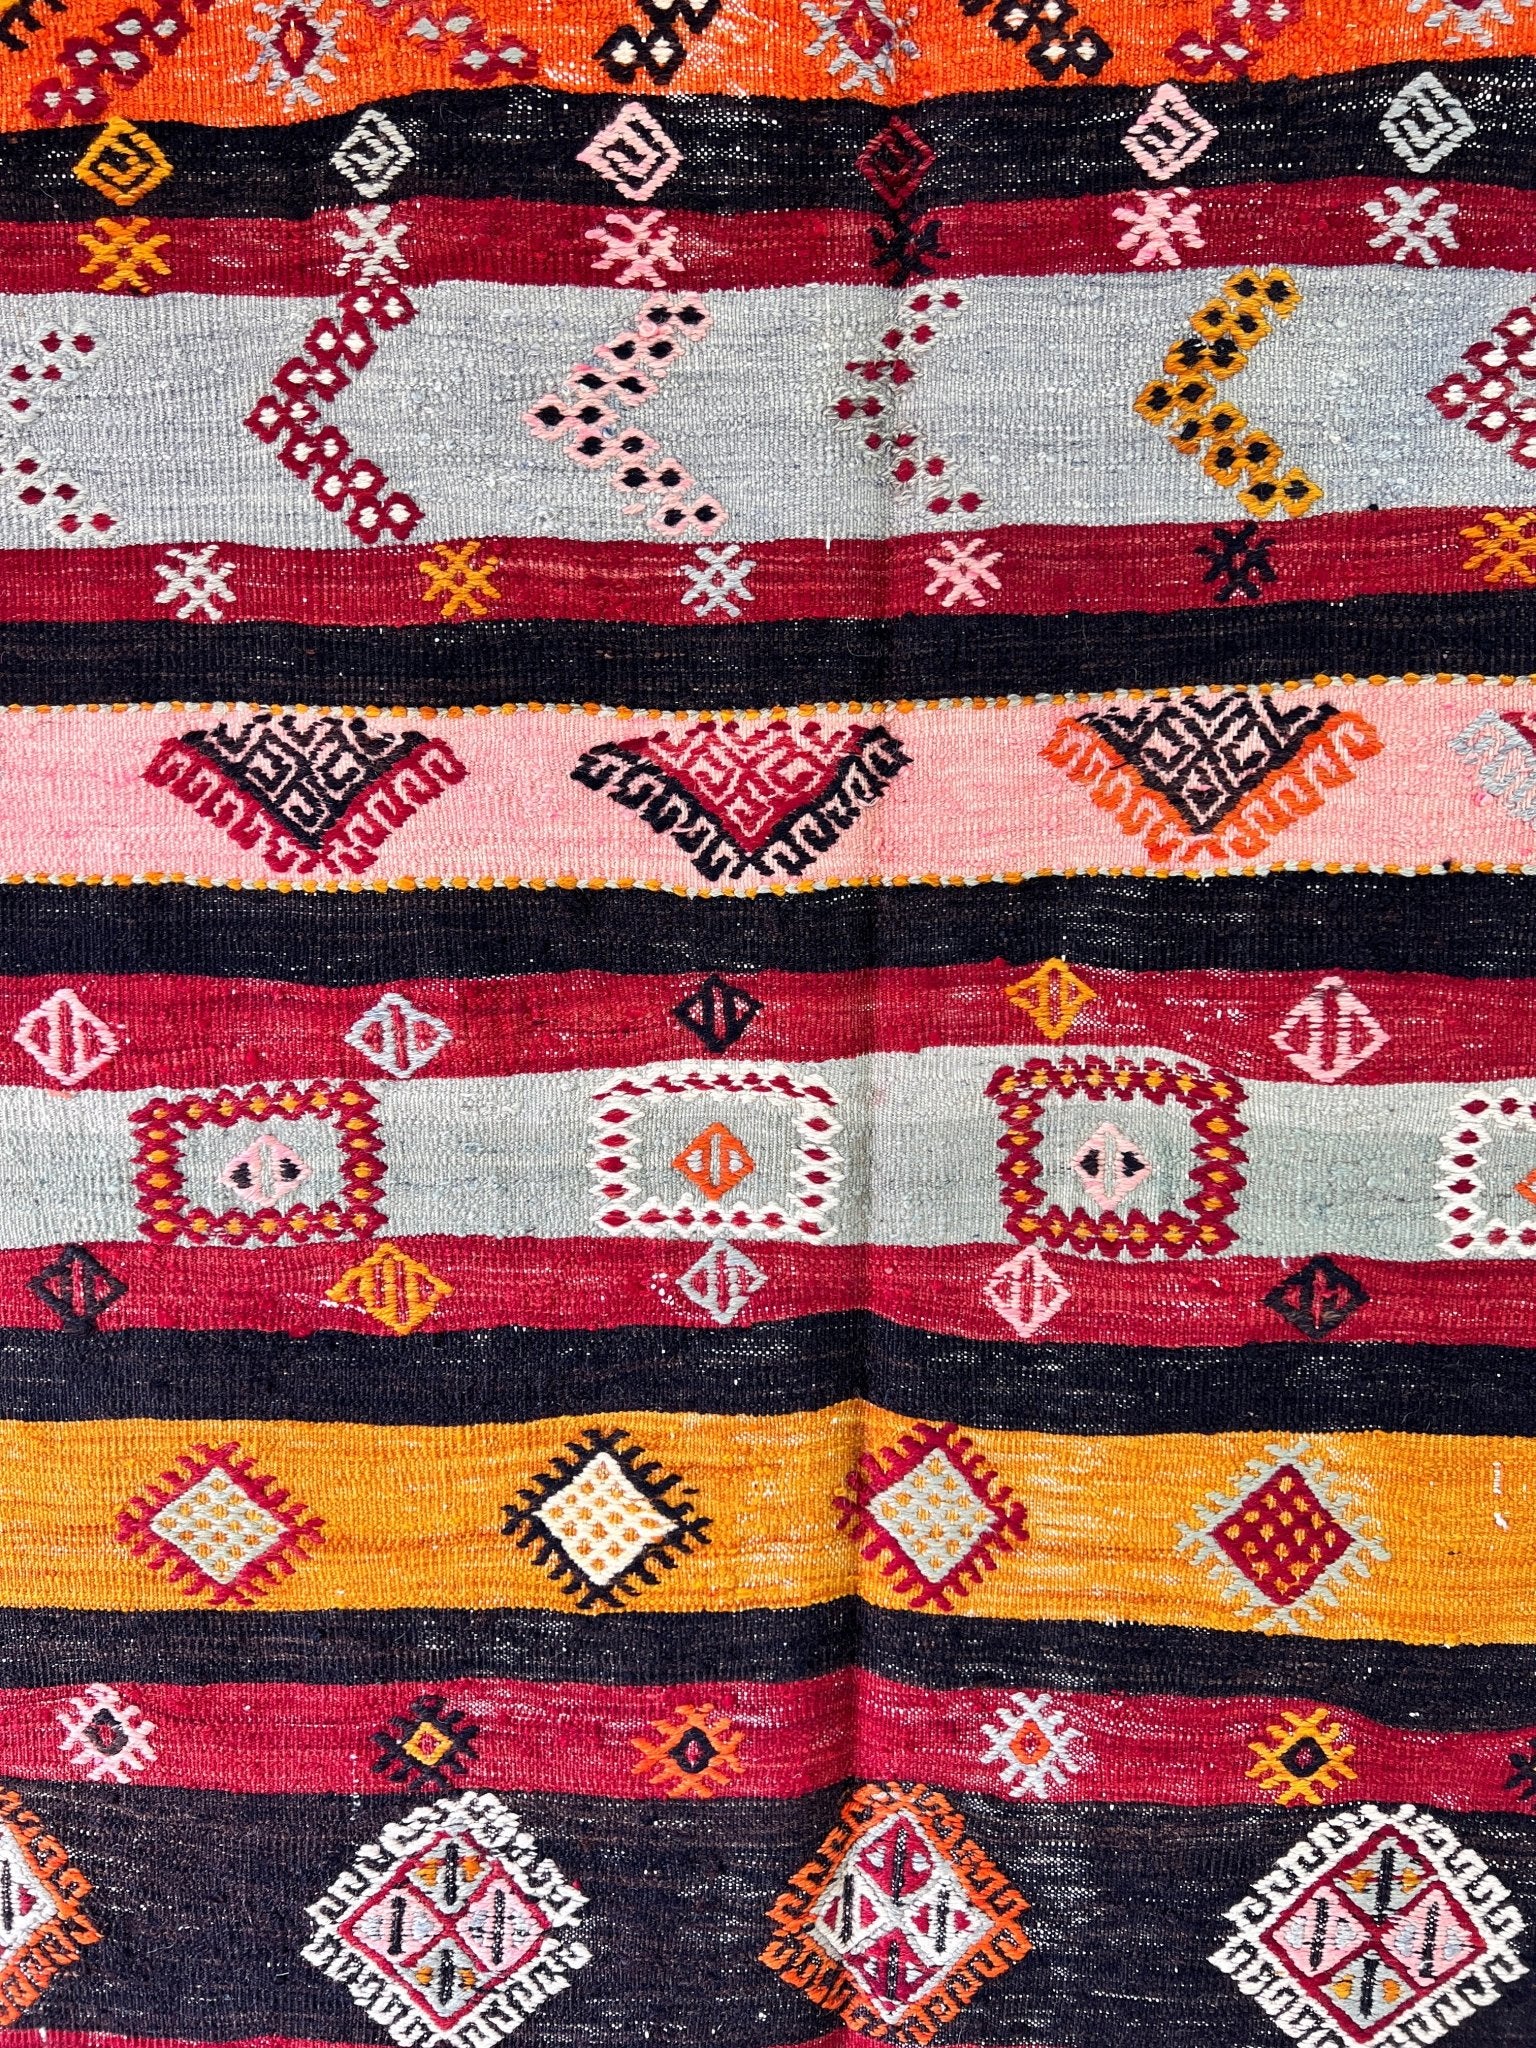 van kurdish kilim oriental rug shop palo alto vintage rug shopping san francisco bay area berkeley buy rug online california